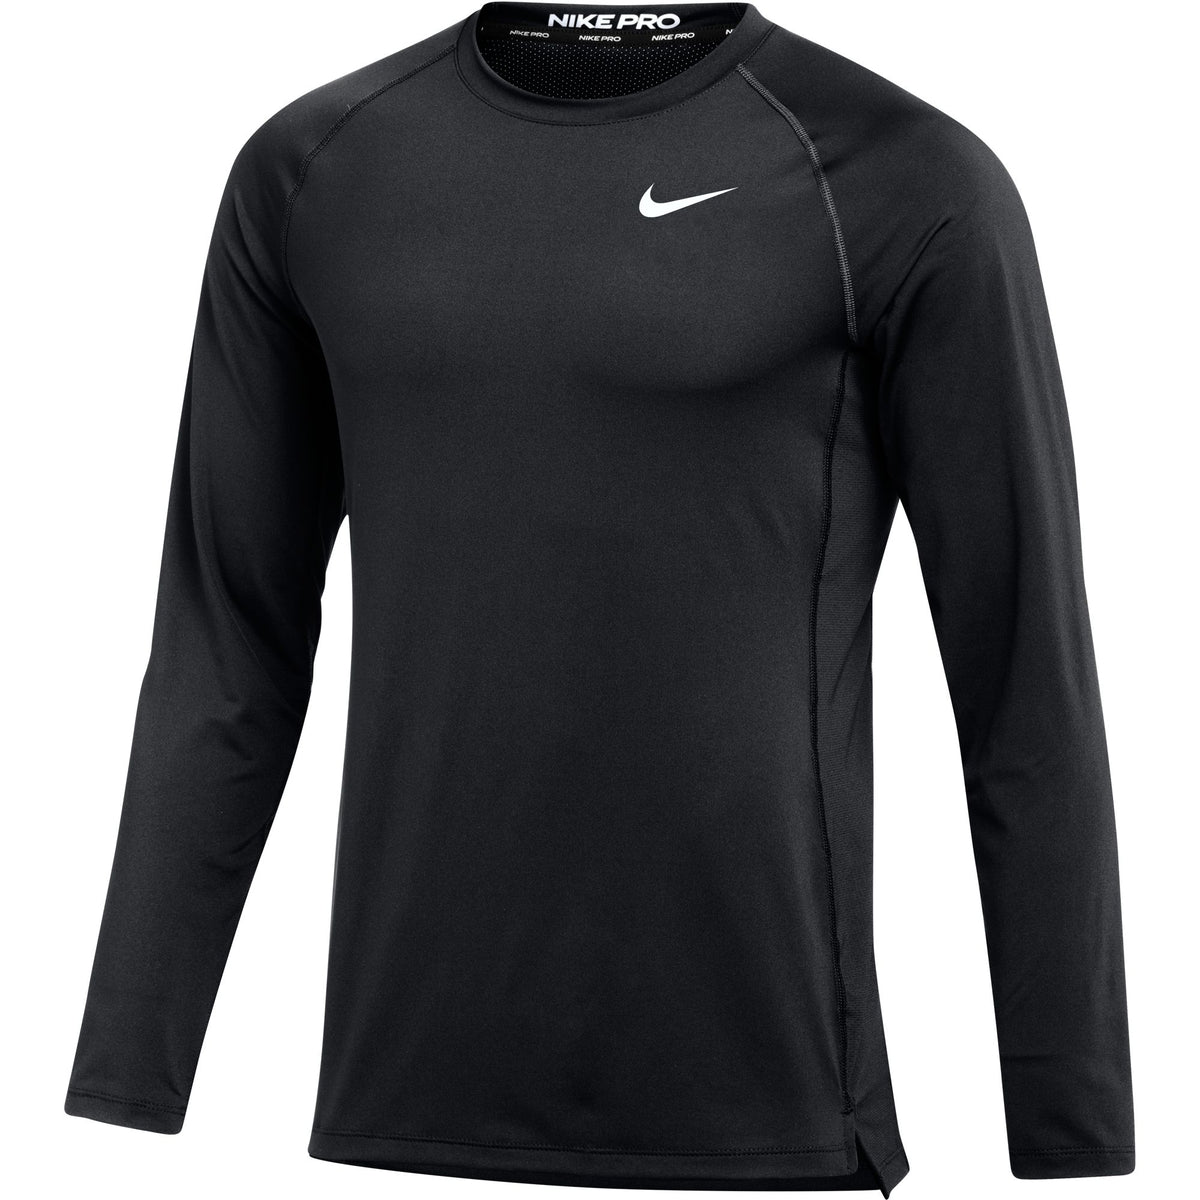 Nike Pro Slim Men's Long Sleeve Training Top - Niky's Sports